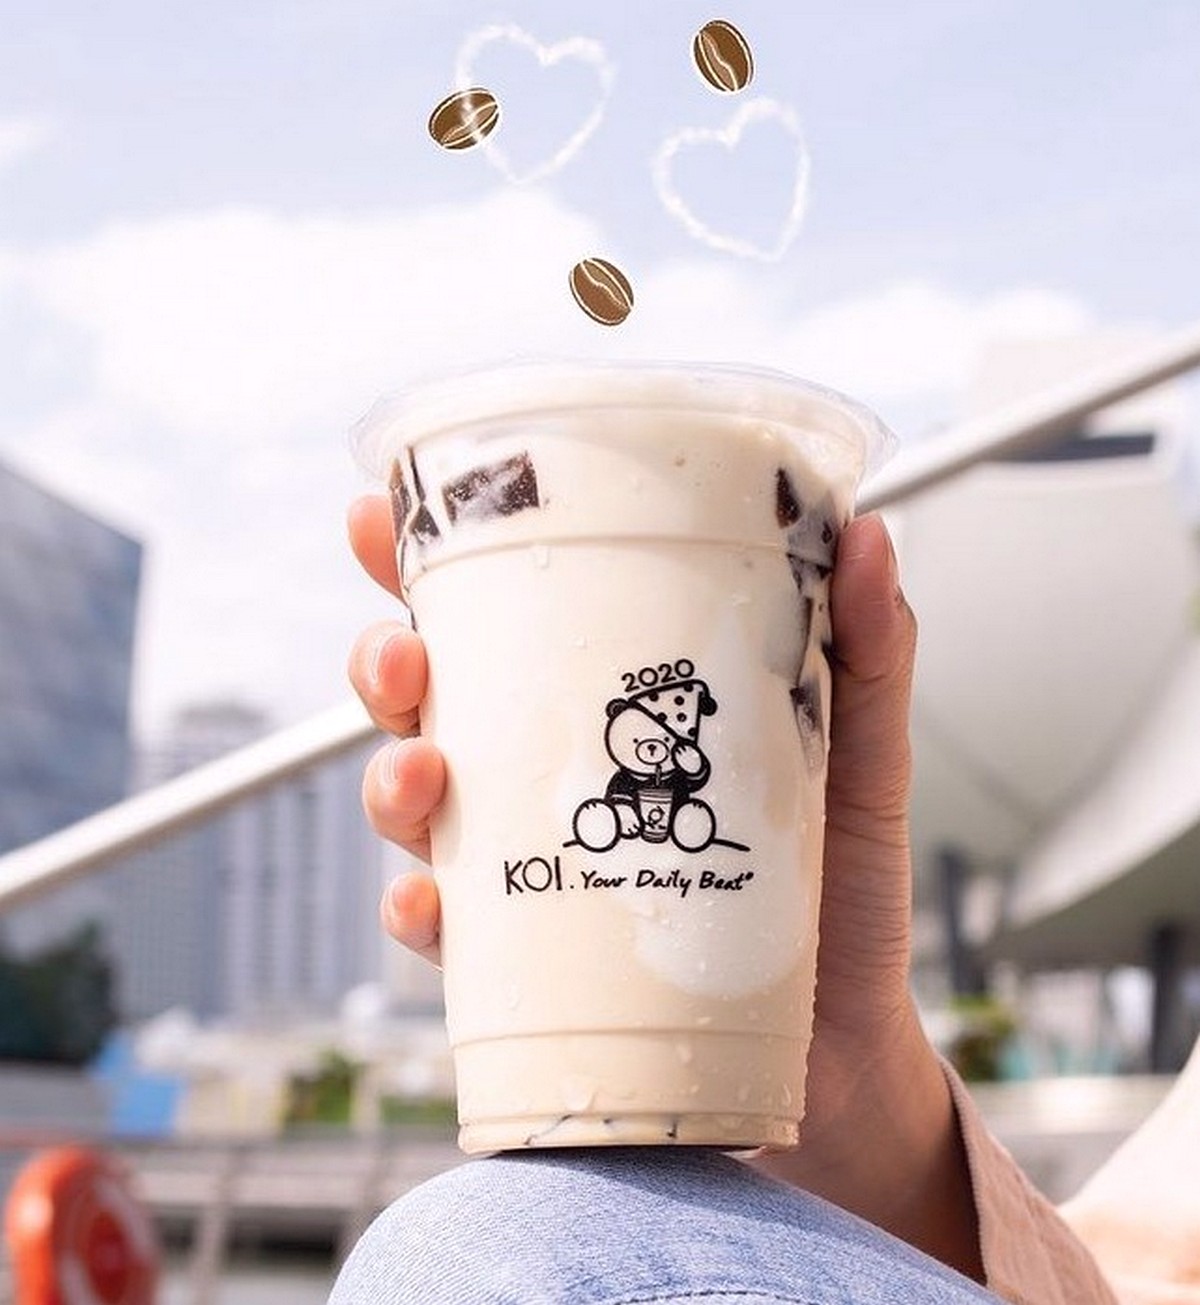 KOI 30 Apr 2021: KOI Thé Singapore $1 Bubble Milk Tea Promotion with Deliveroo